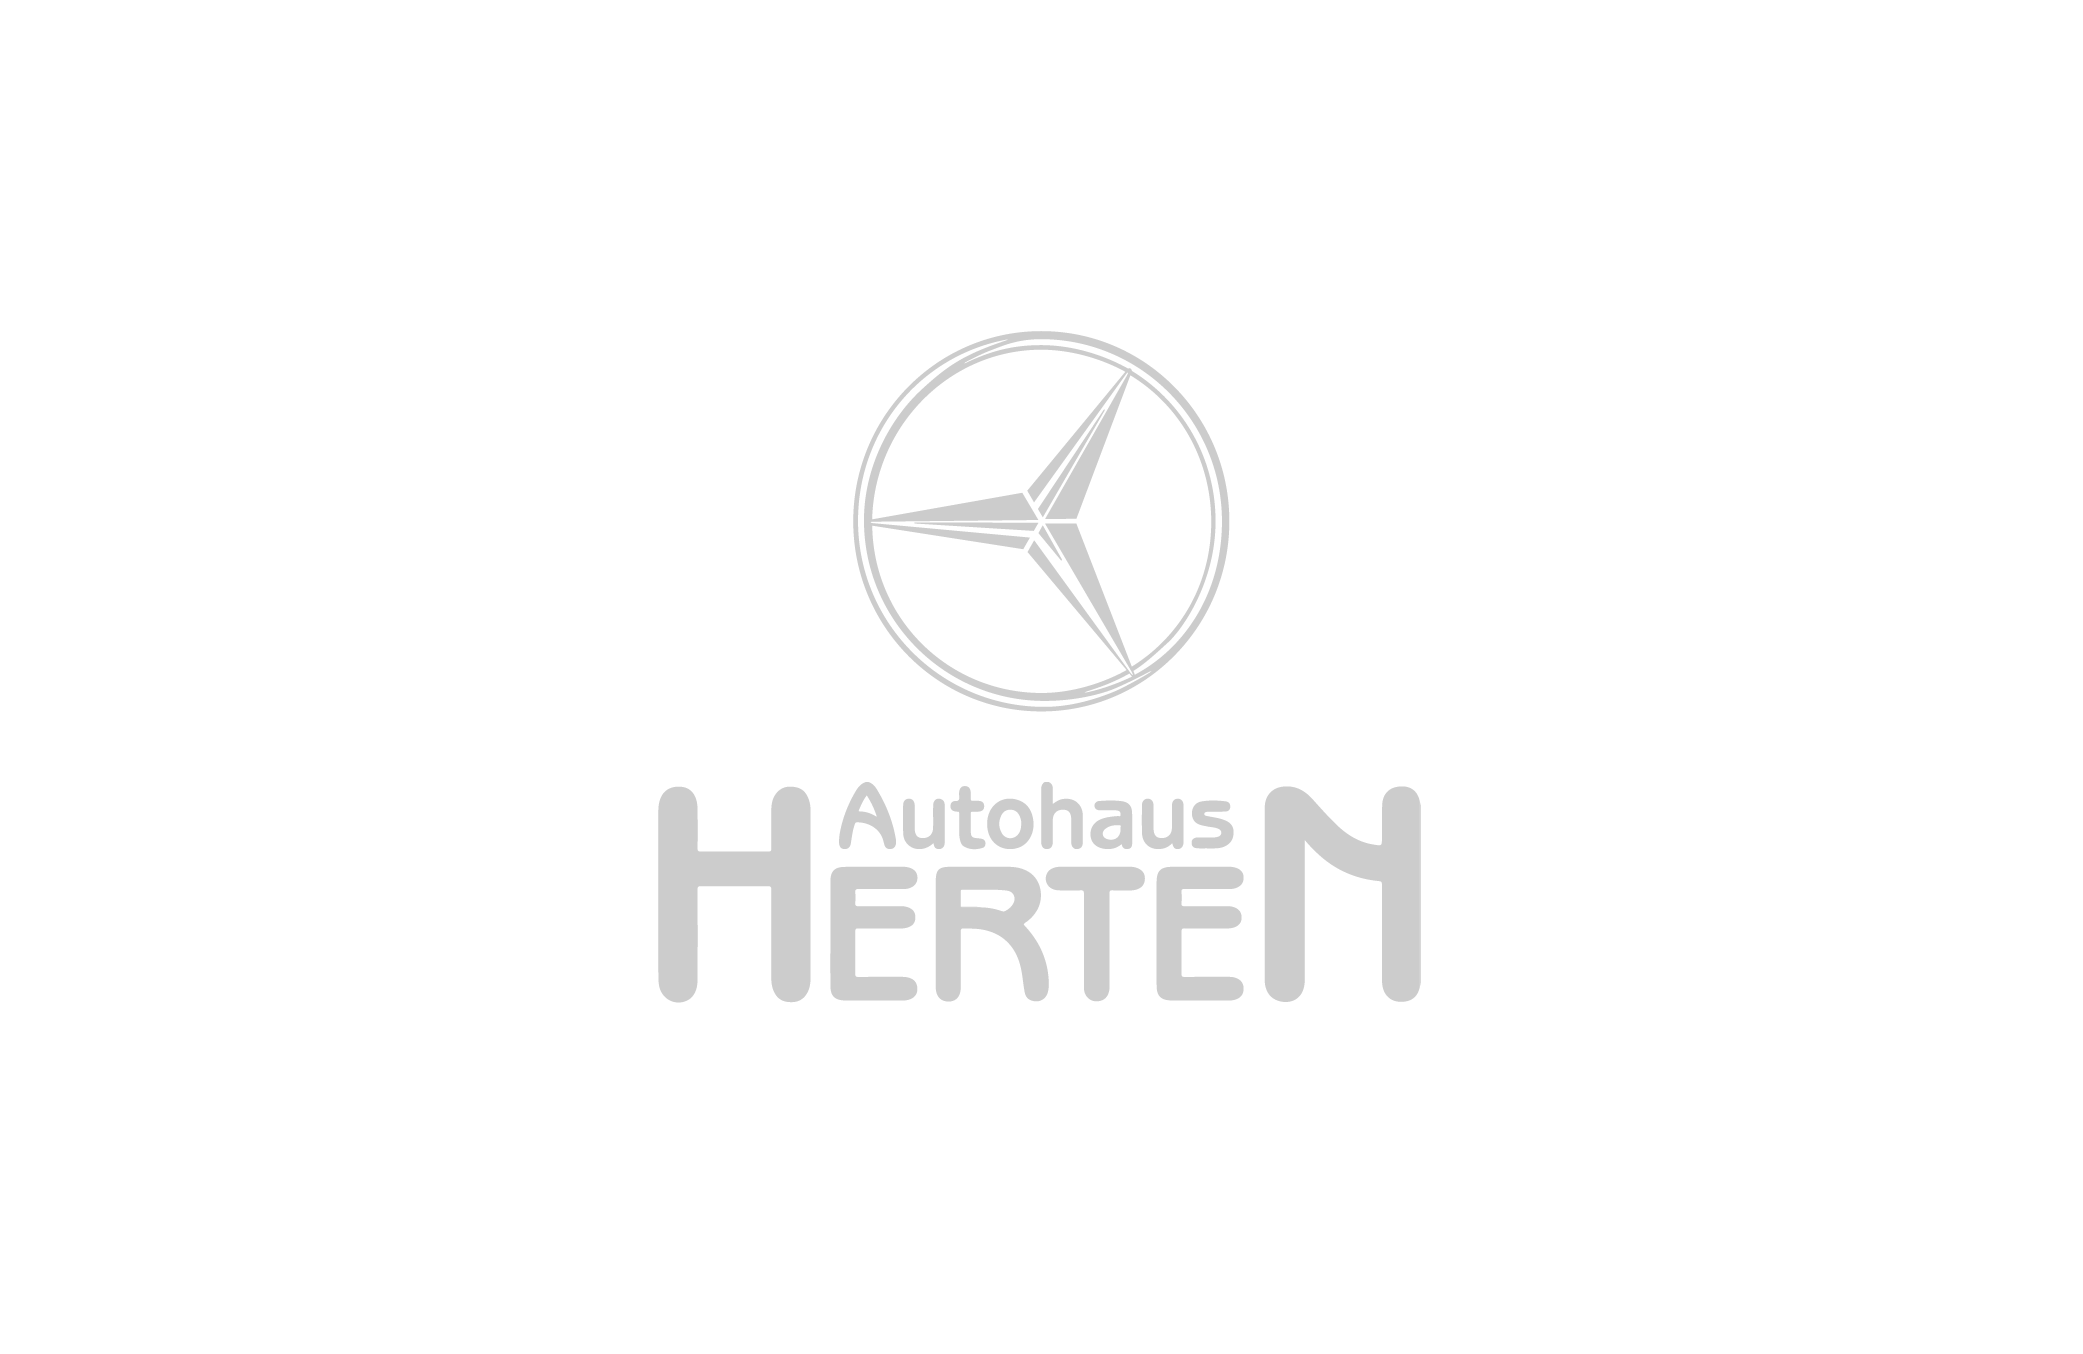 Mercedes-Benz Herten